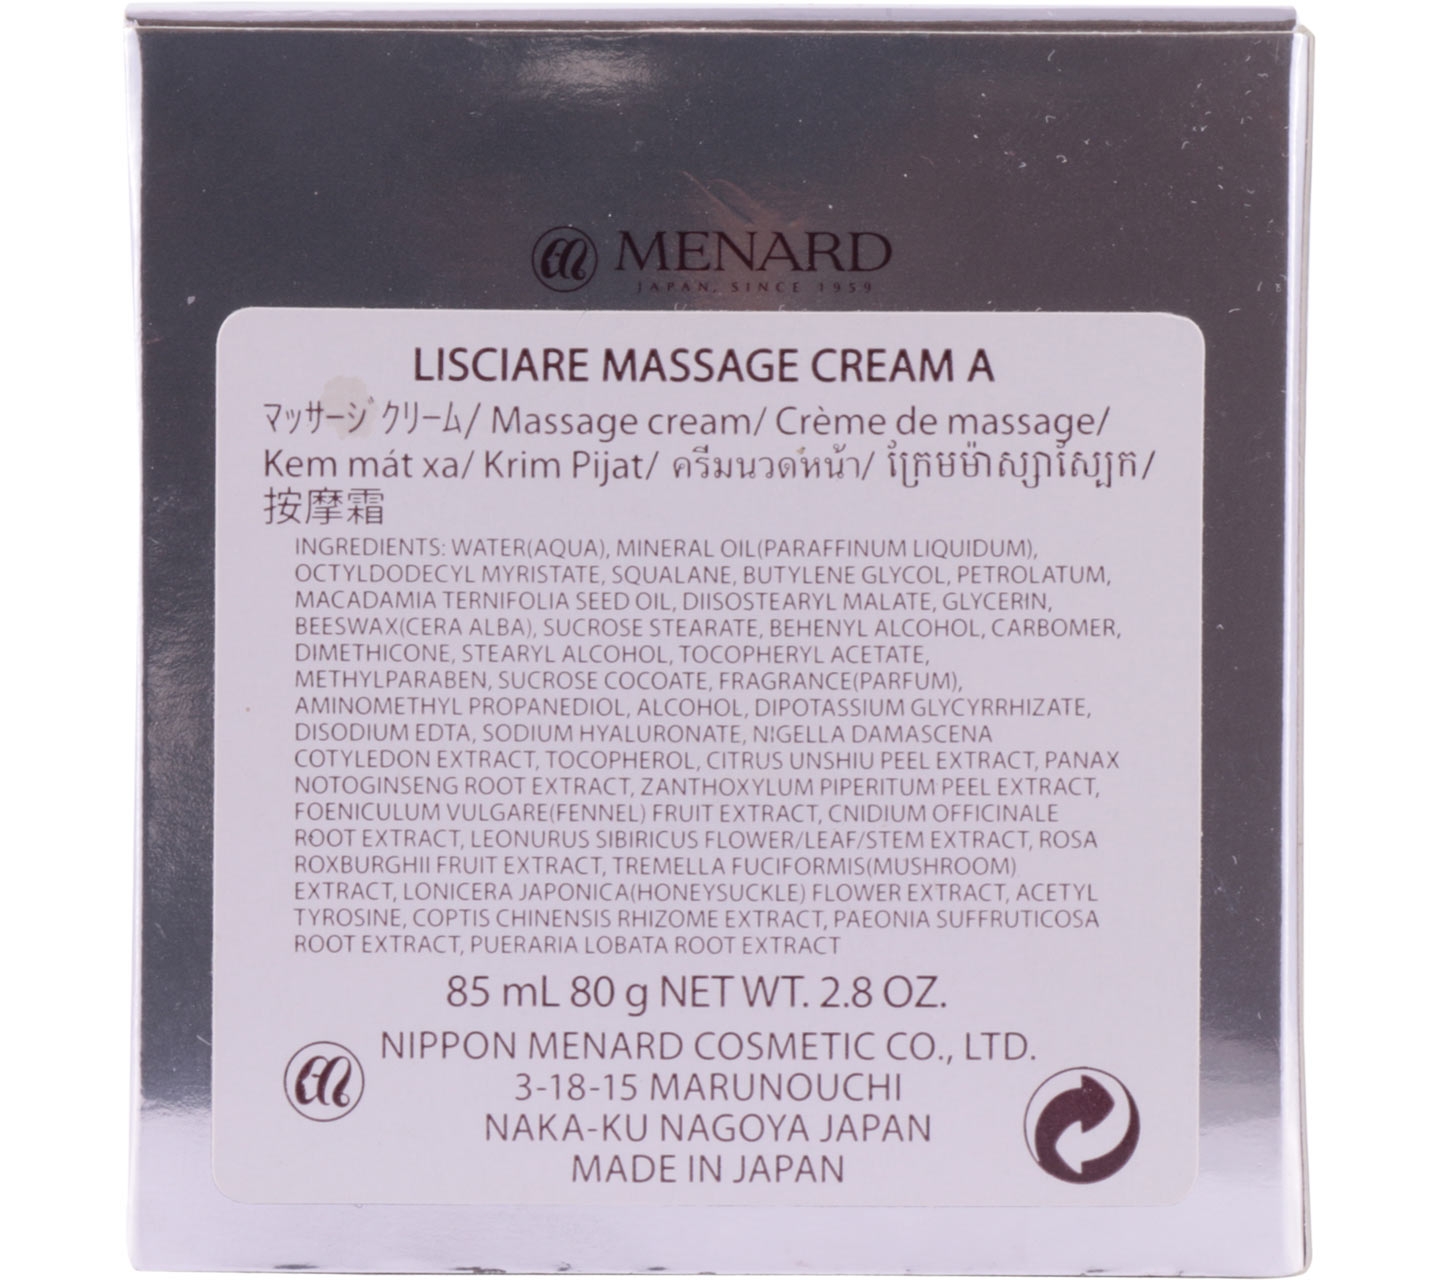 Menard Lisciare Massage Cream Skin Care